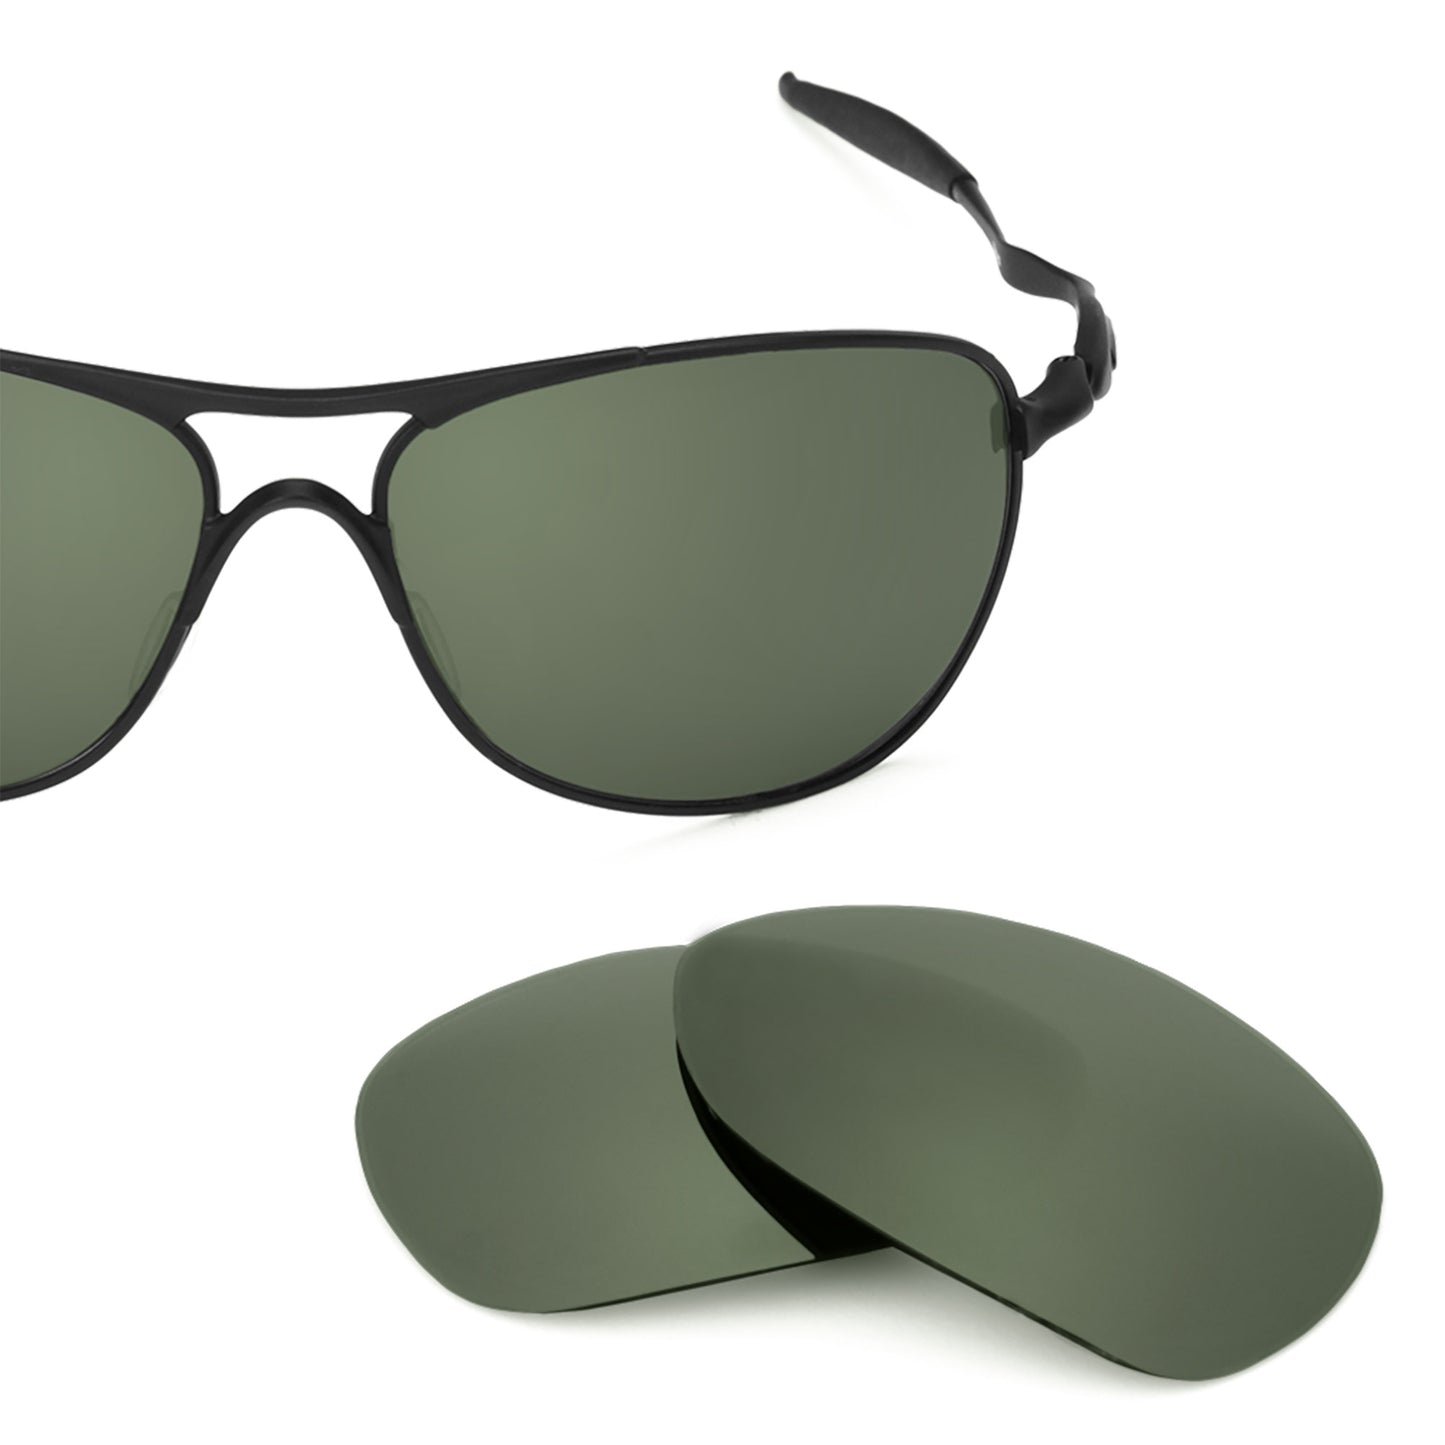 Revant replacement lenses for Oakley Crosshair (2012) Non-Polarized Gray Green